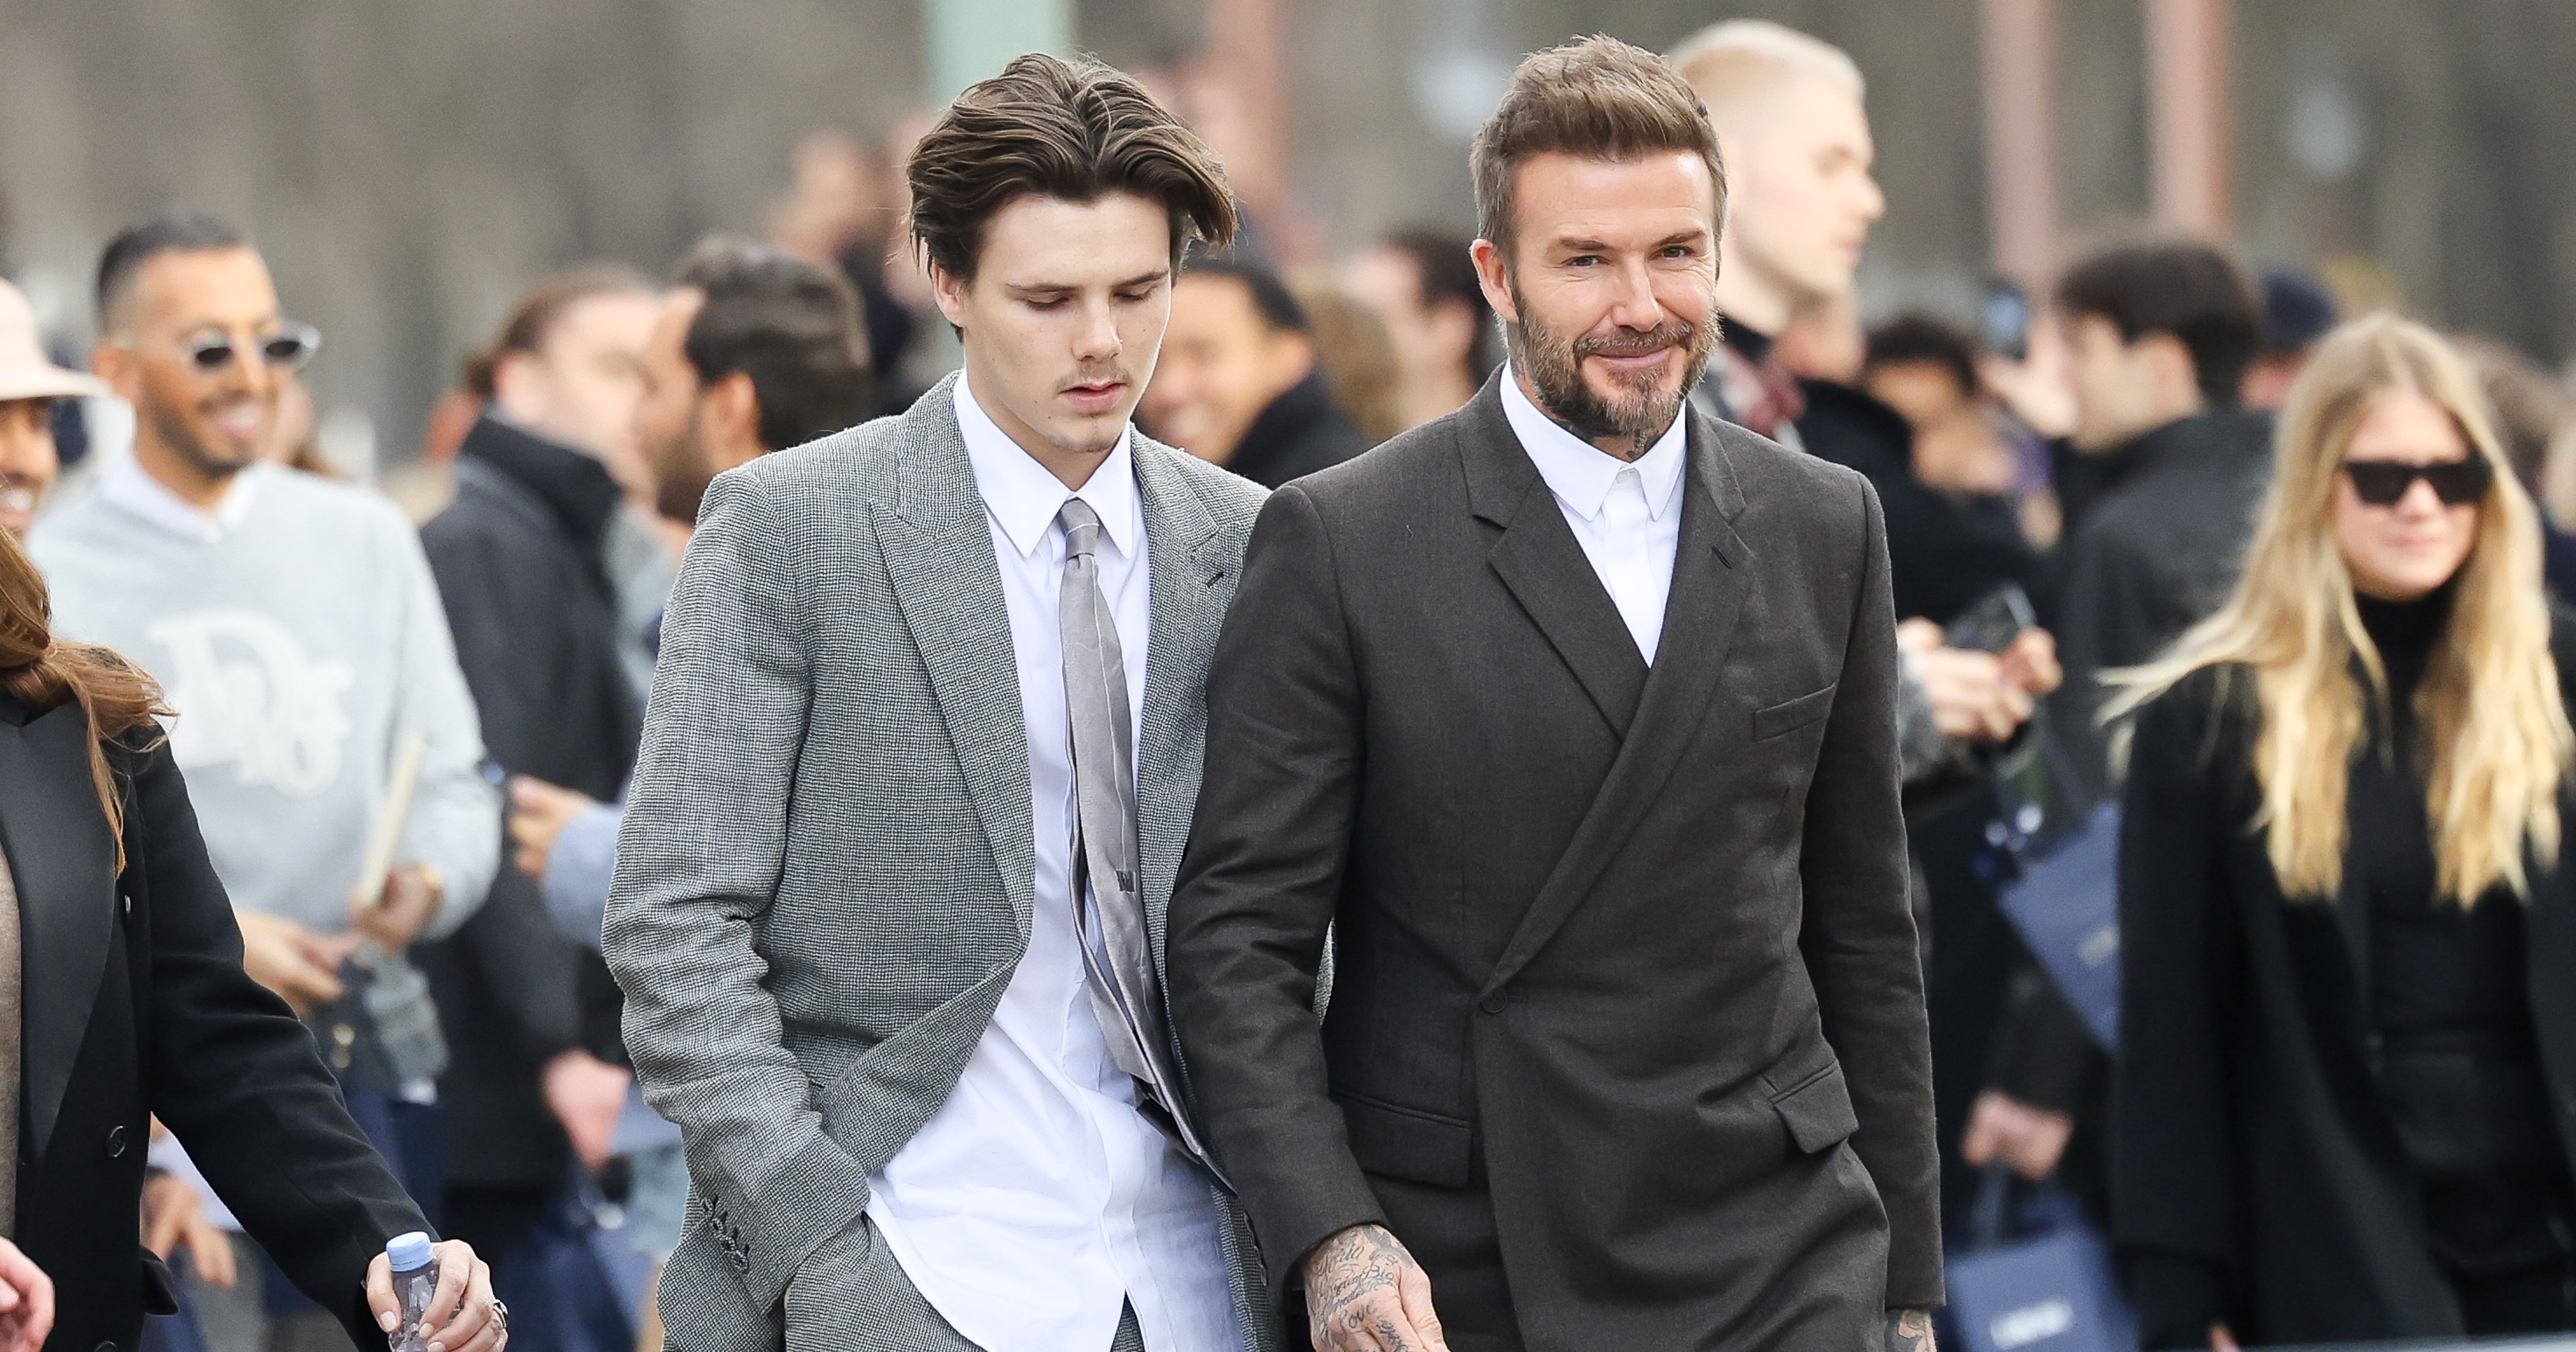 The David Beckham Look Book